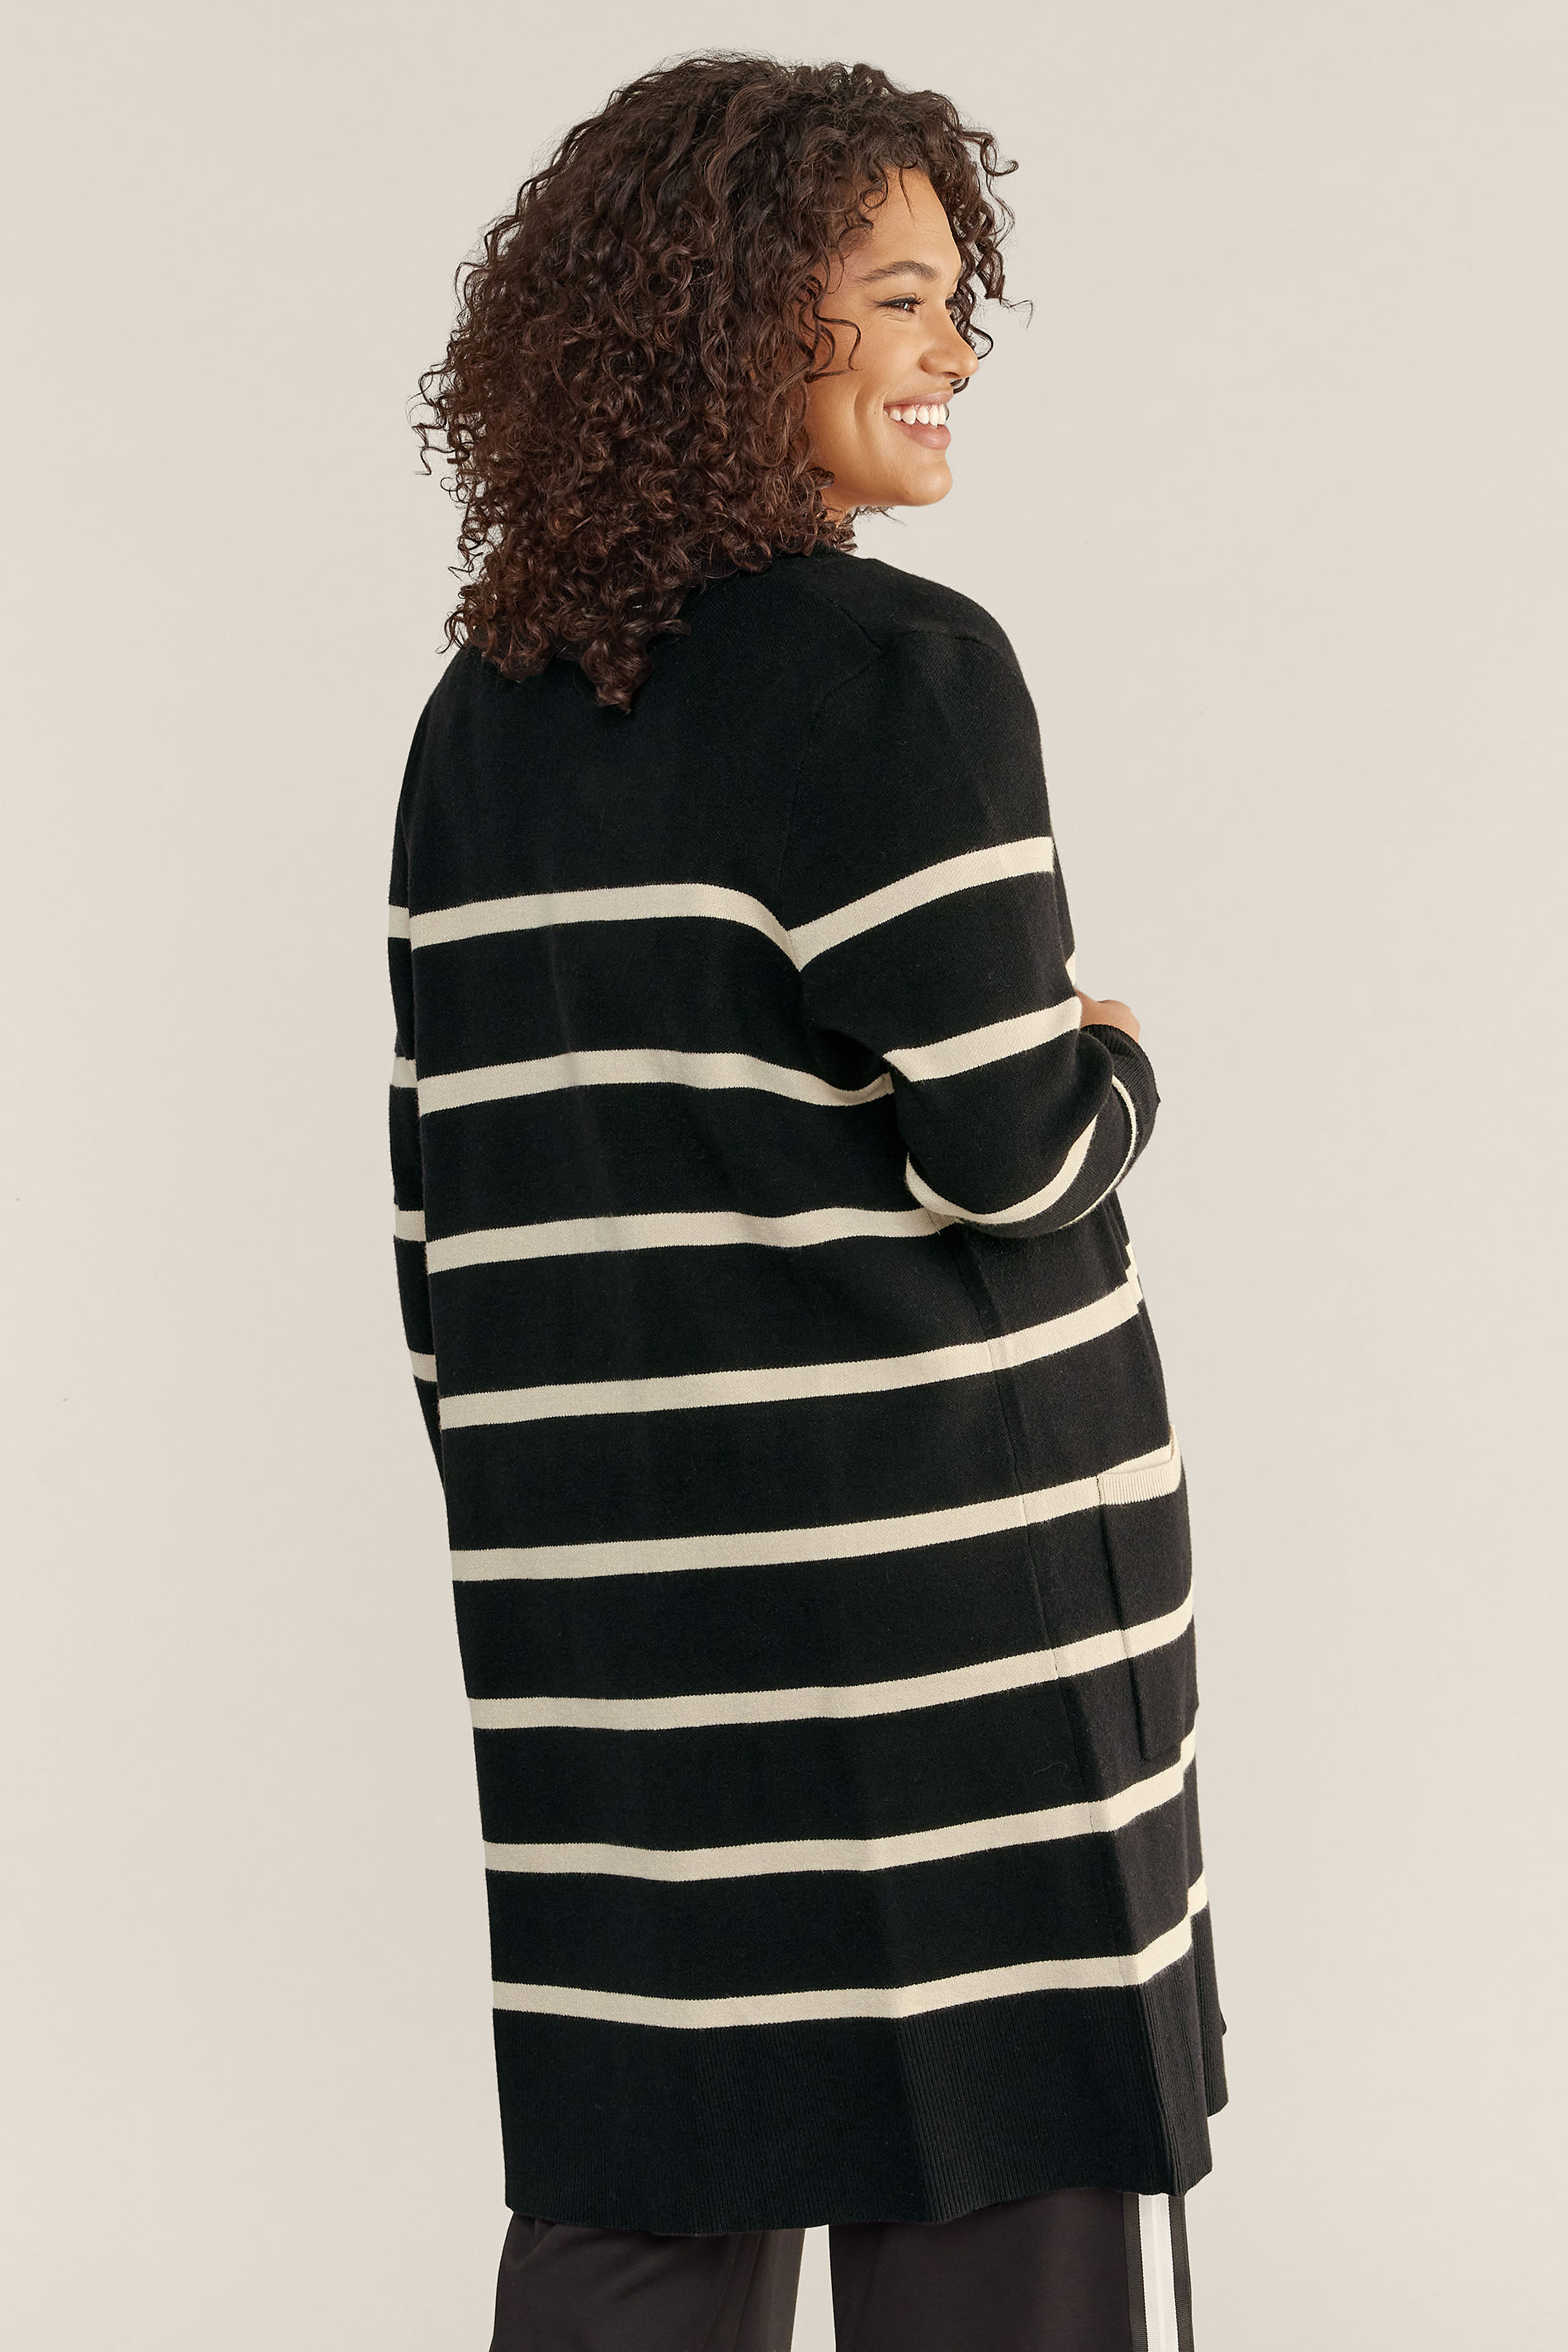 EVANS Plus Size Black & Ivory White Stripe Knitted Cardigan | Evans 3